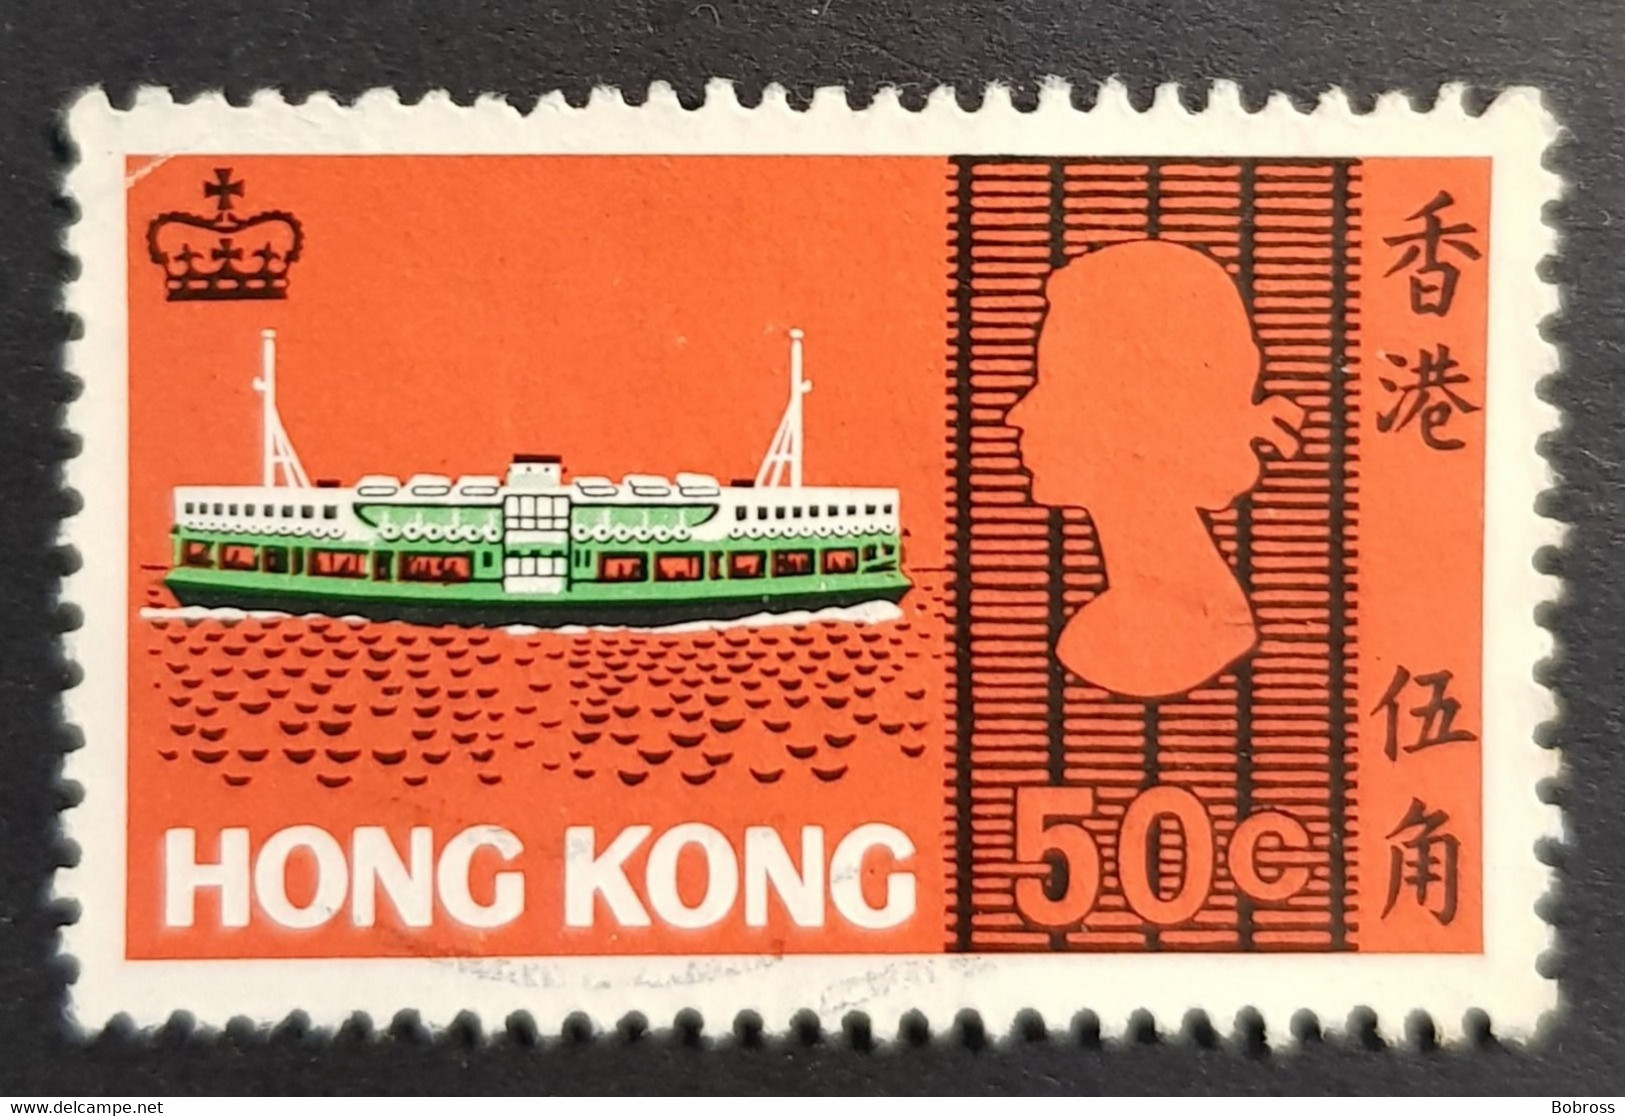 1968 Sea Craft, Hong Kong, China, Used - Oblitérés